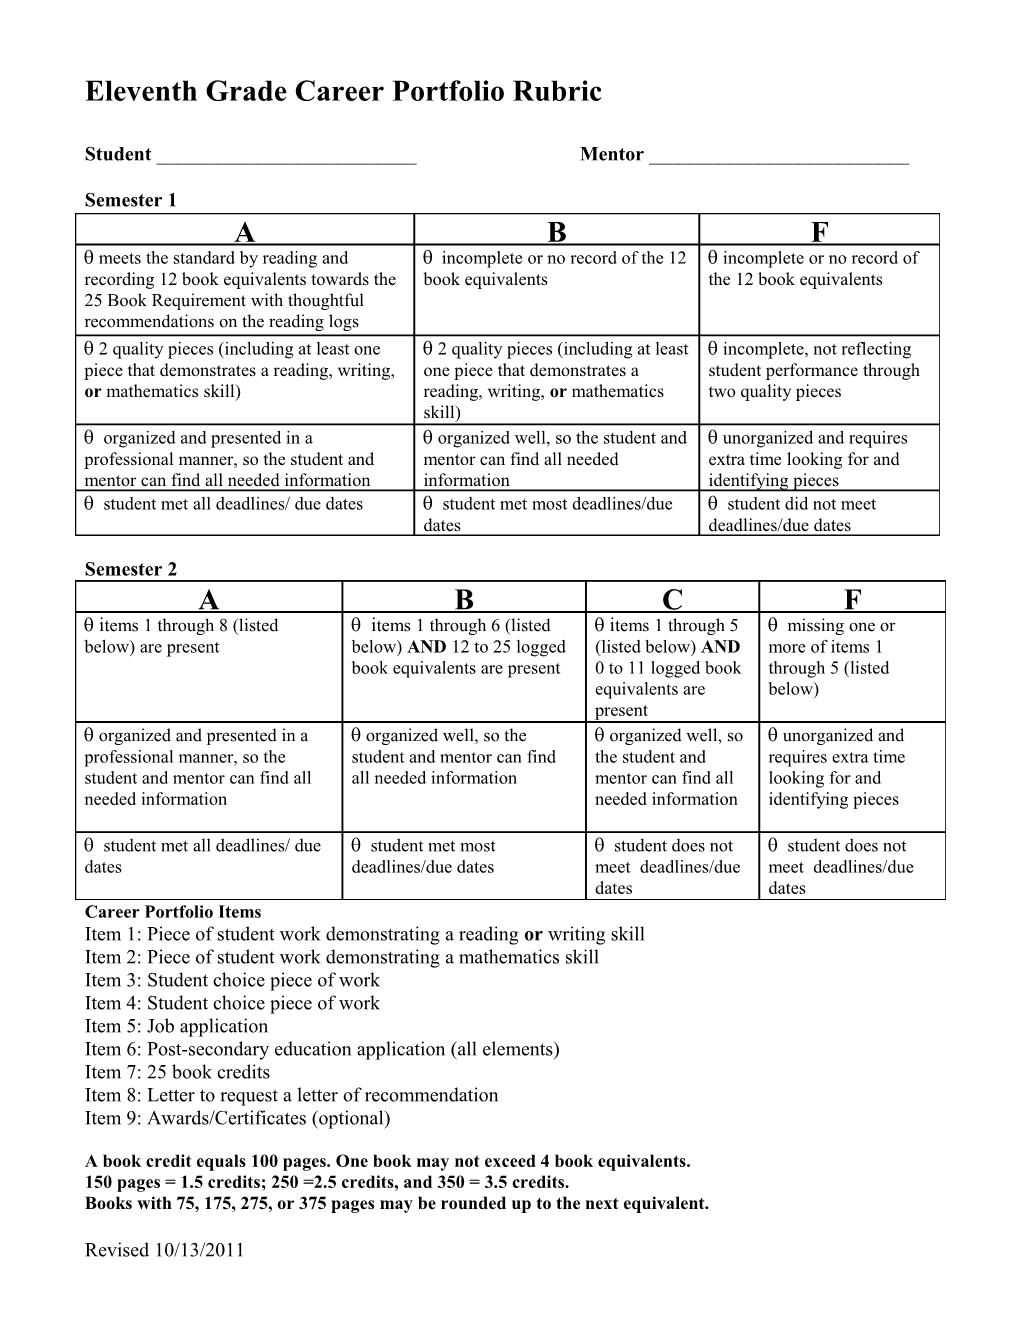 Portfolio Rubric for Grades 9-12